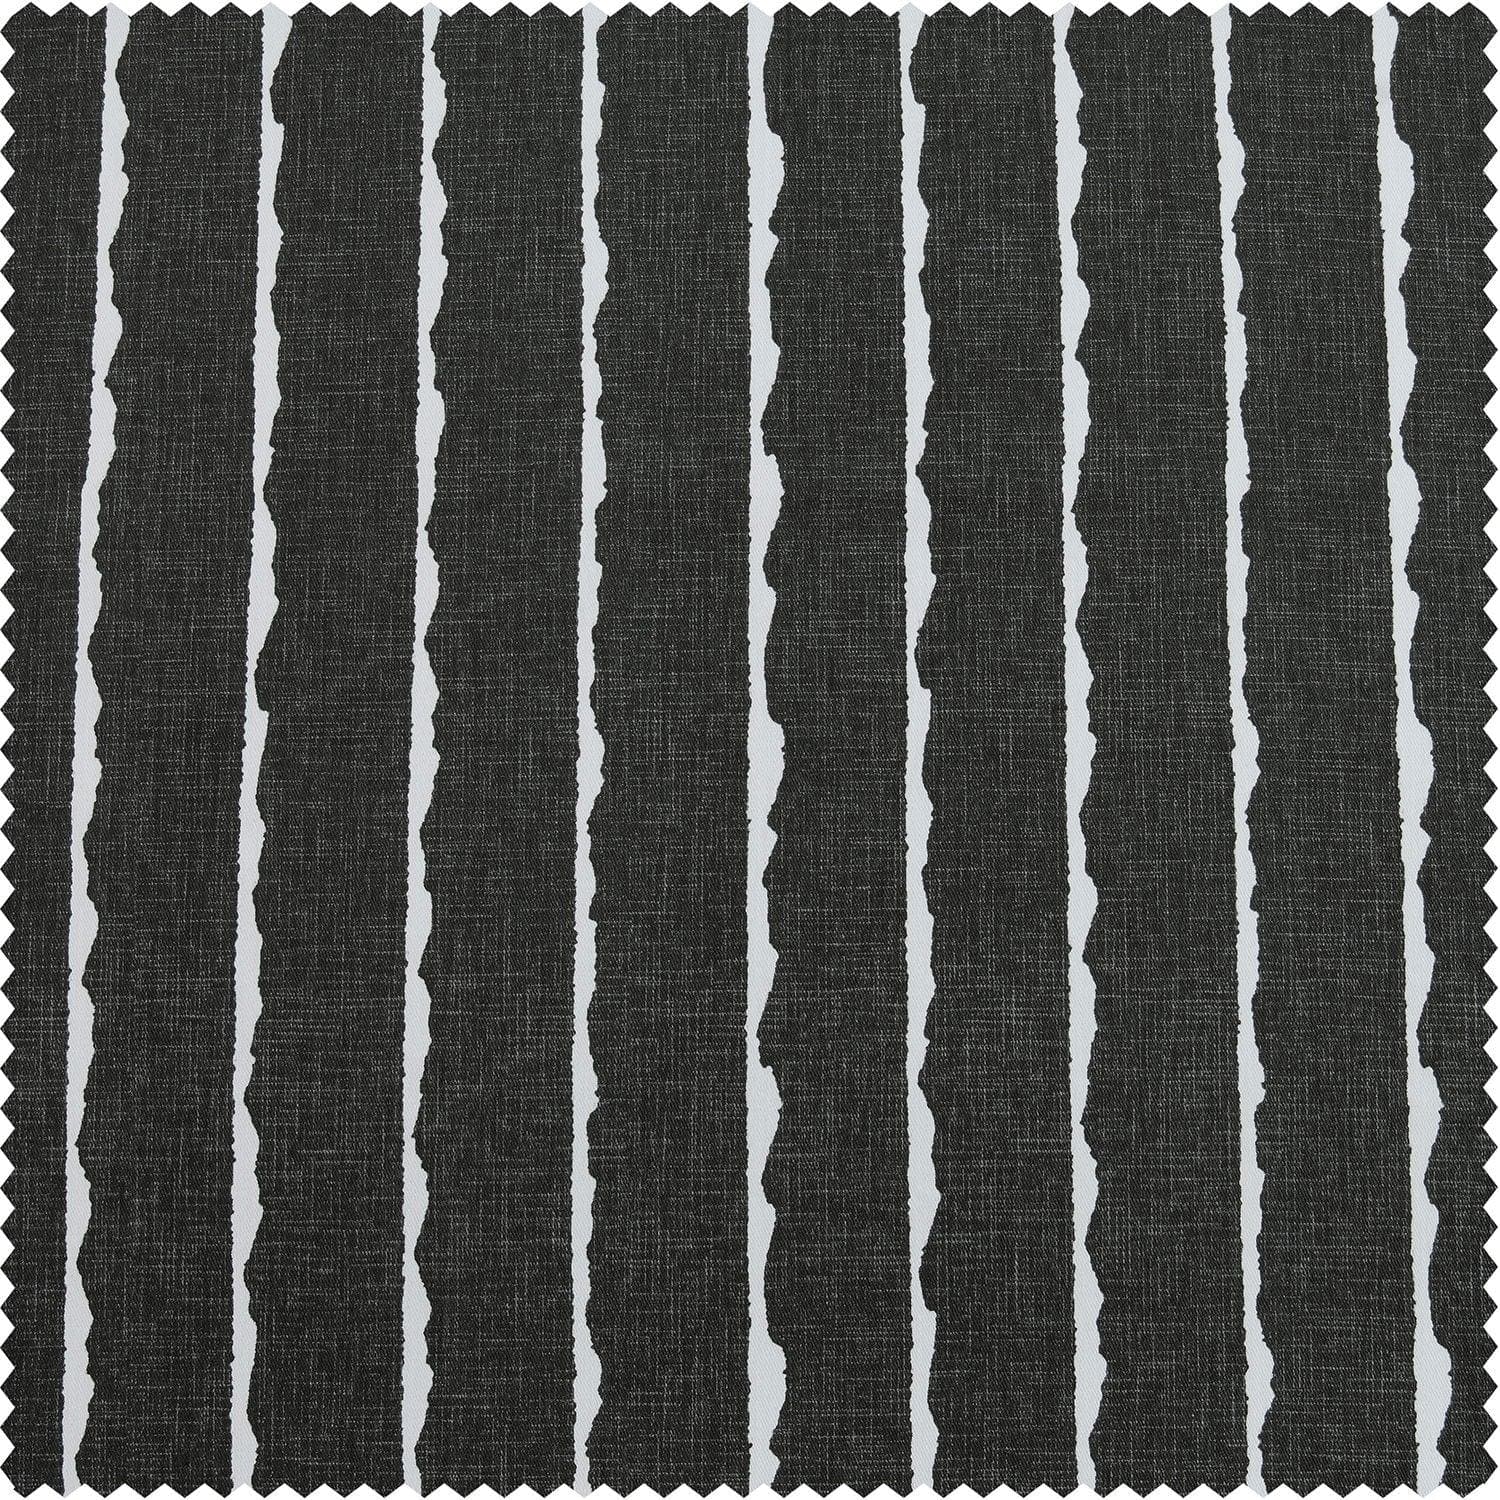 Sharkskin Black Solid Printed Cotton Custom Curtain